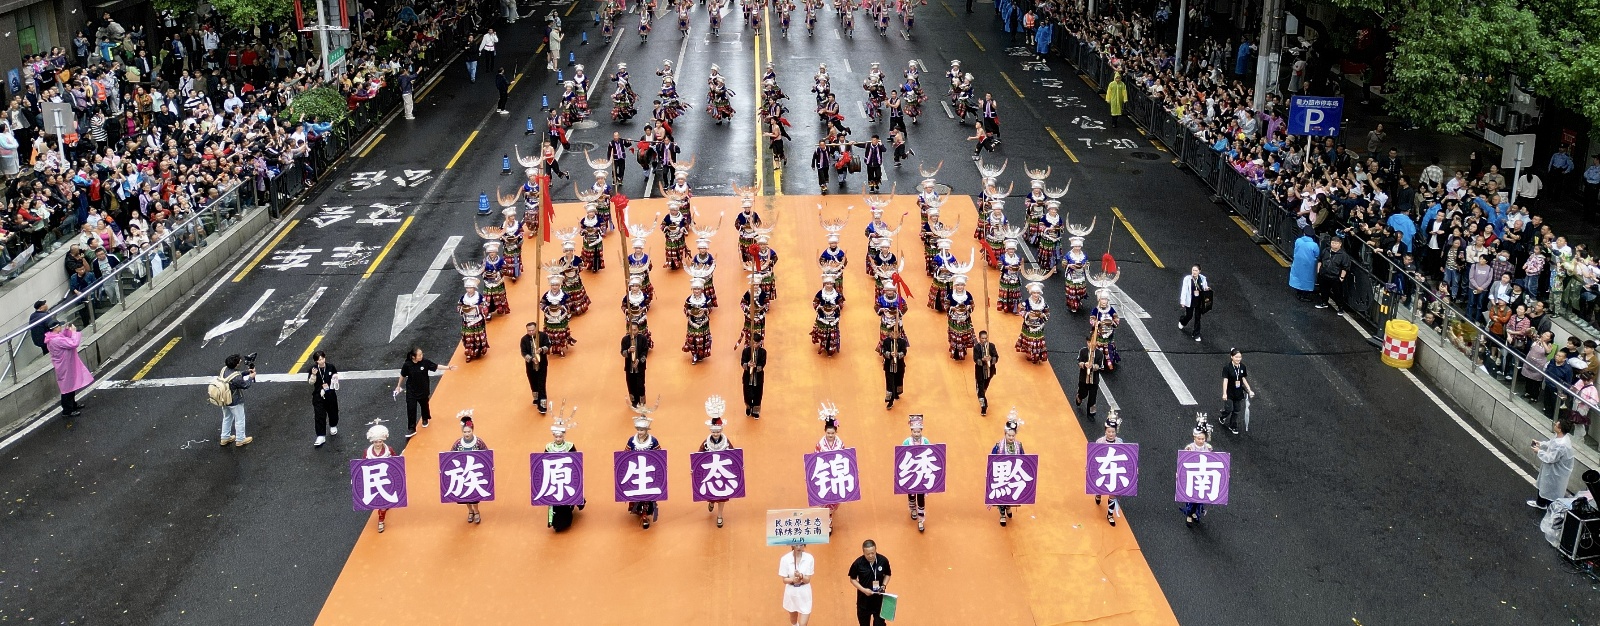 Guiyang city holds grand ethnic parade